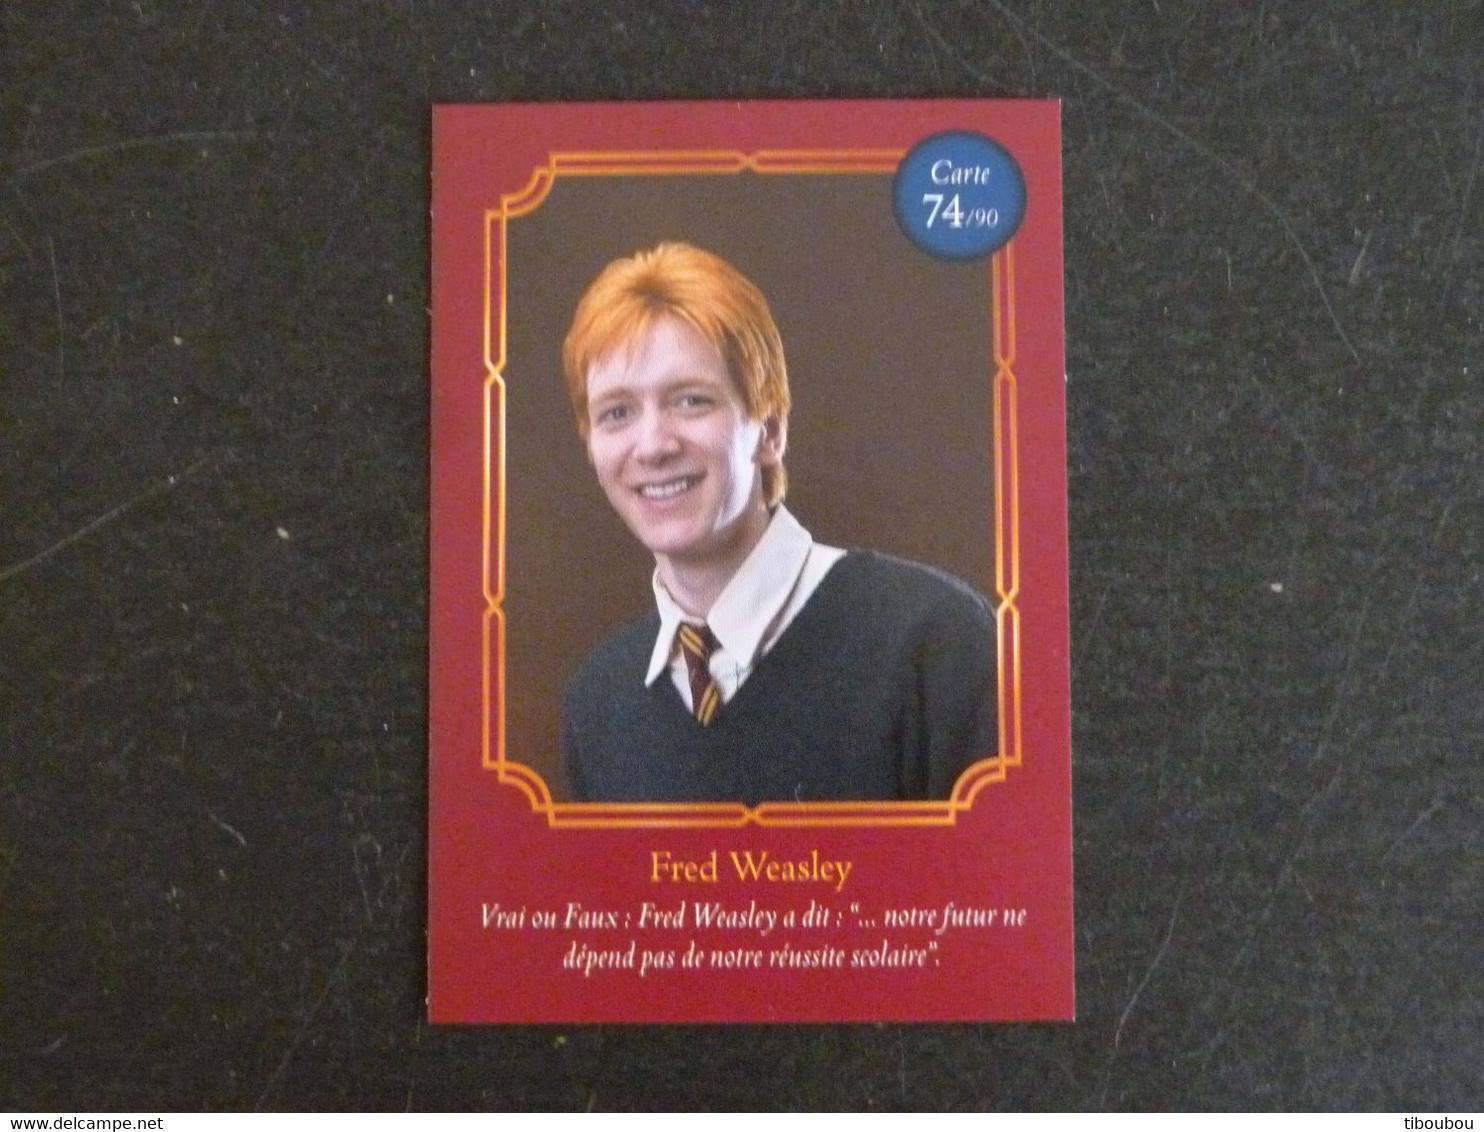 CARTE AUCHAN HARRY POTTER 74/90 FRED WEASLEY - Harry Potter